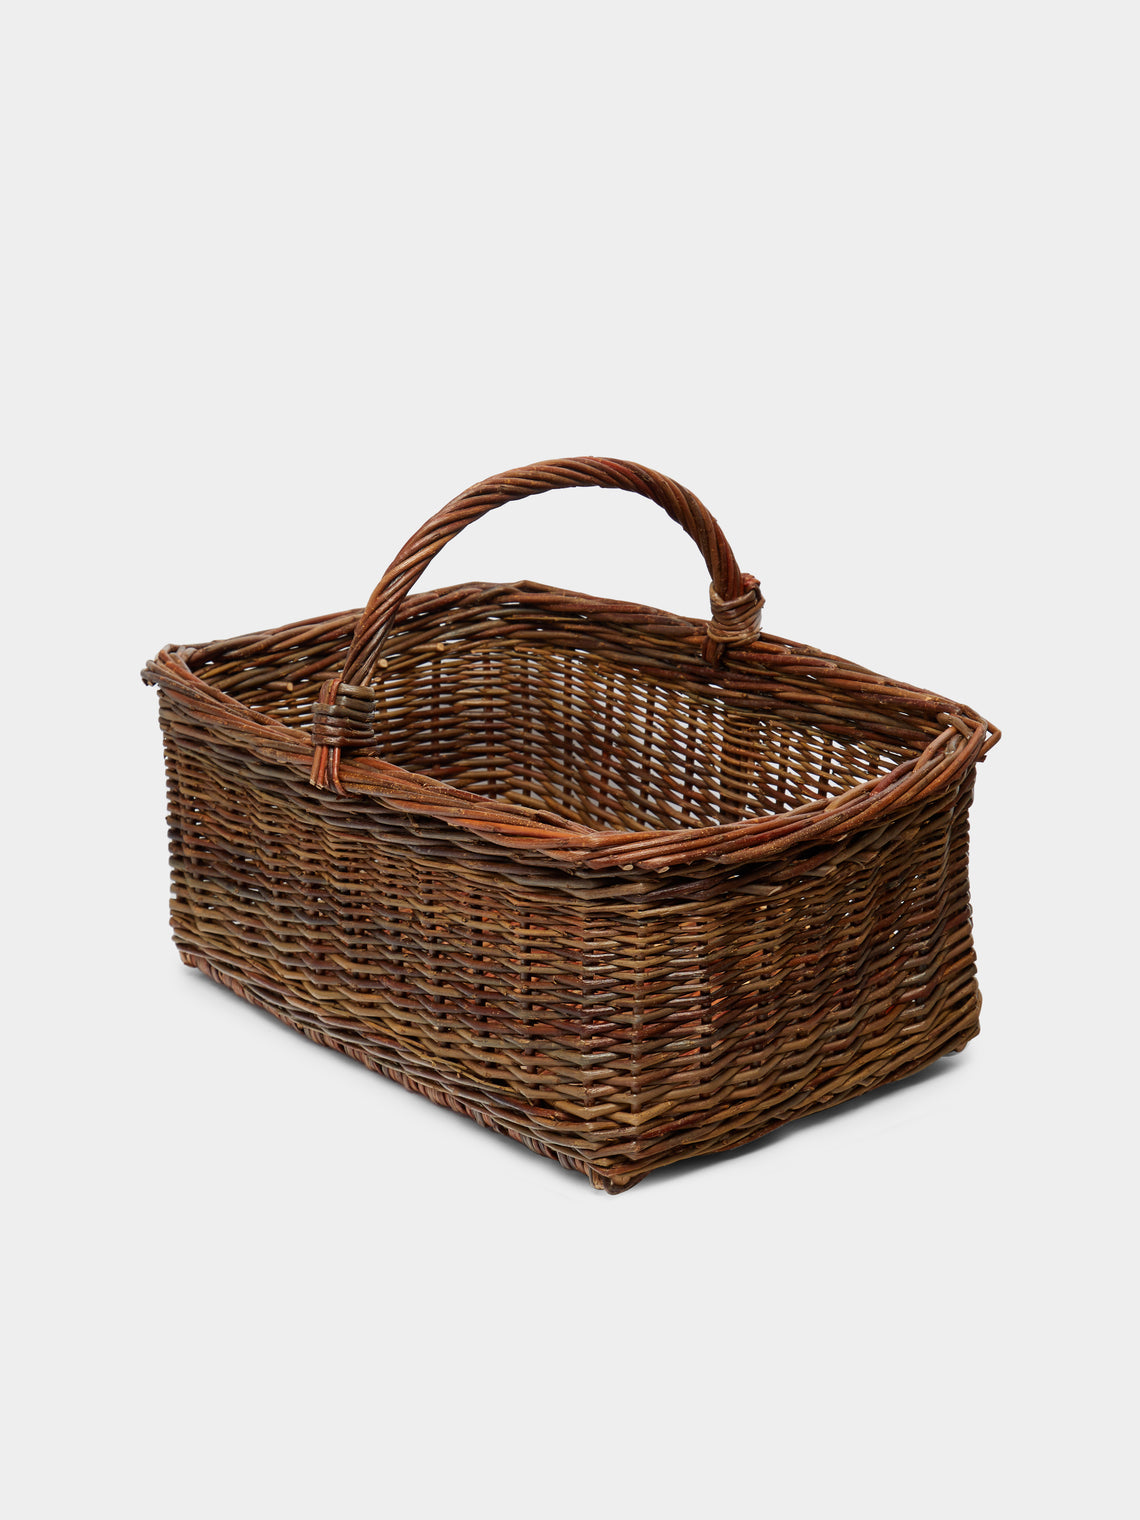 Valérie Lavaure - Handwoven Willow Rectangular Basket -  - ABASK - 